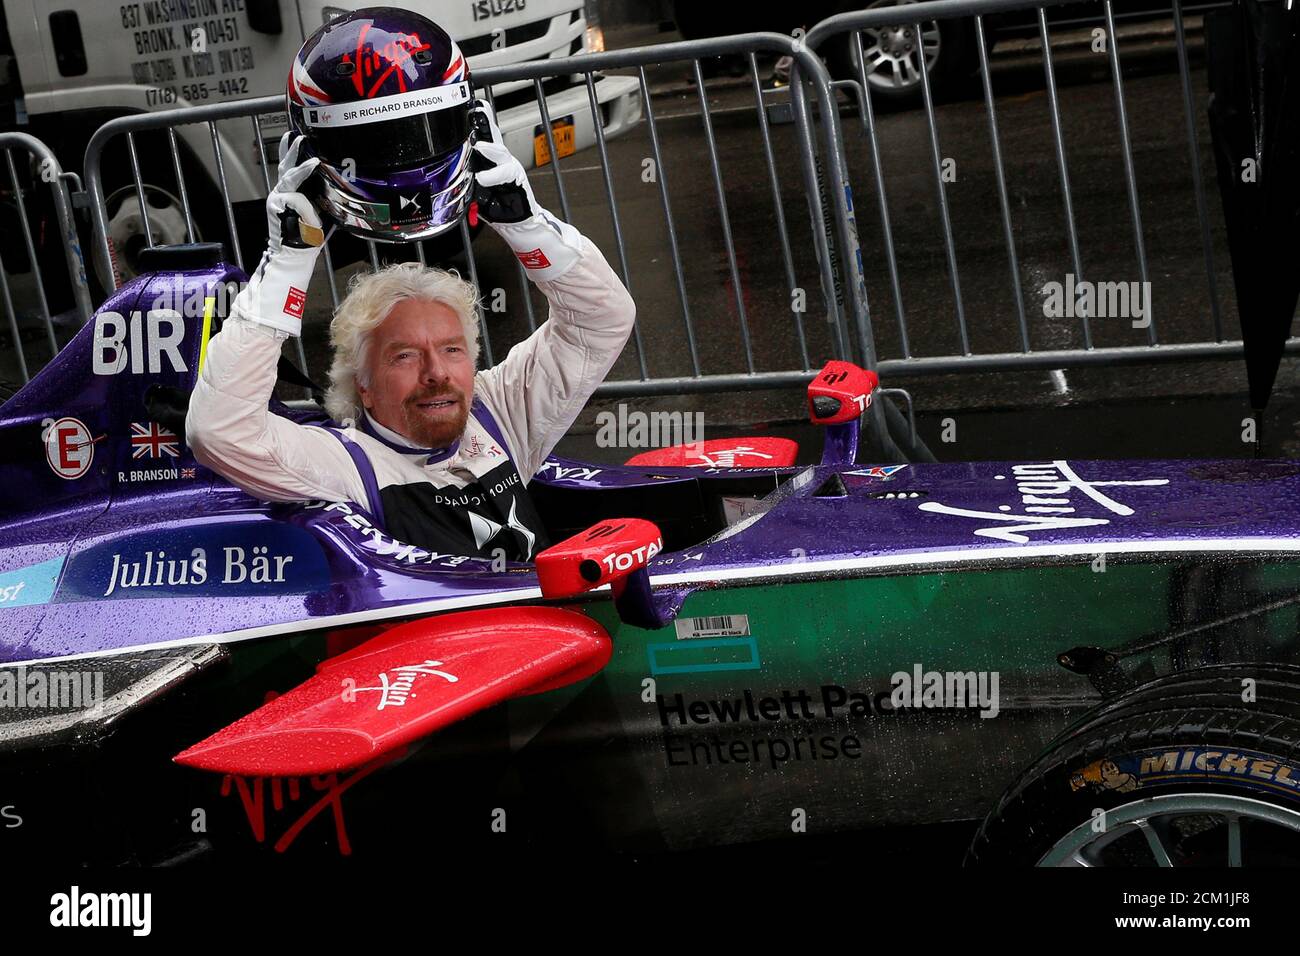 Richard Branson posiert im DS Virgin Racing Formula E-Auto, um die FIA Formula E Championship beim New York City ePrix in New York City, USA, 14. Juli 2017 zu promoten. REUTERS/Brendan McDermid Stockfoto